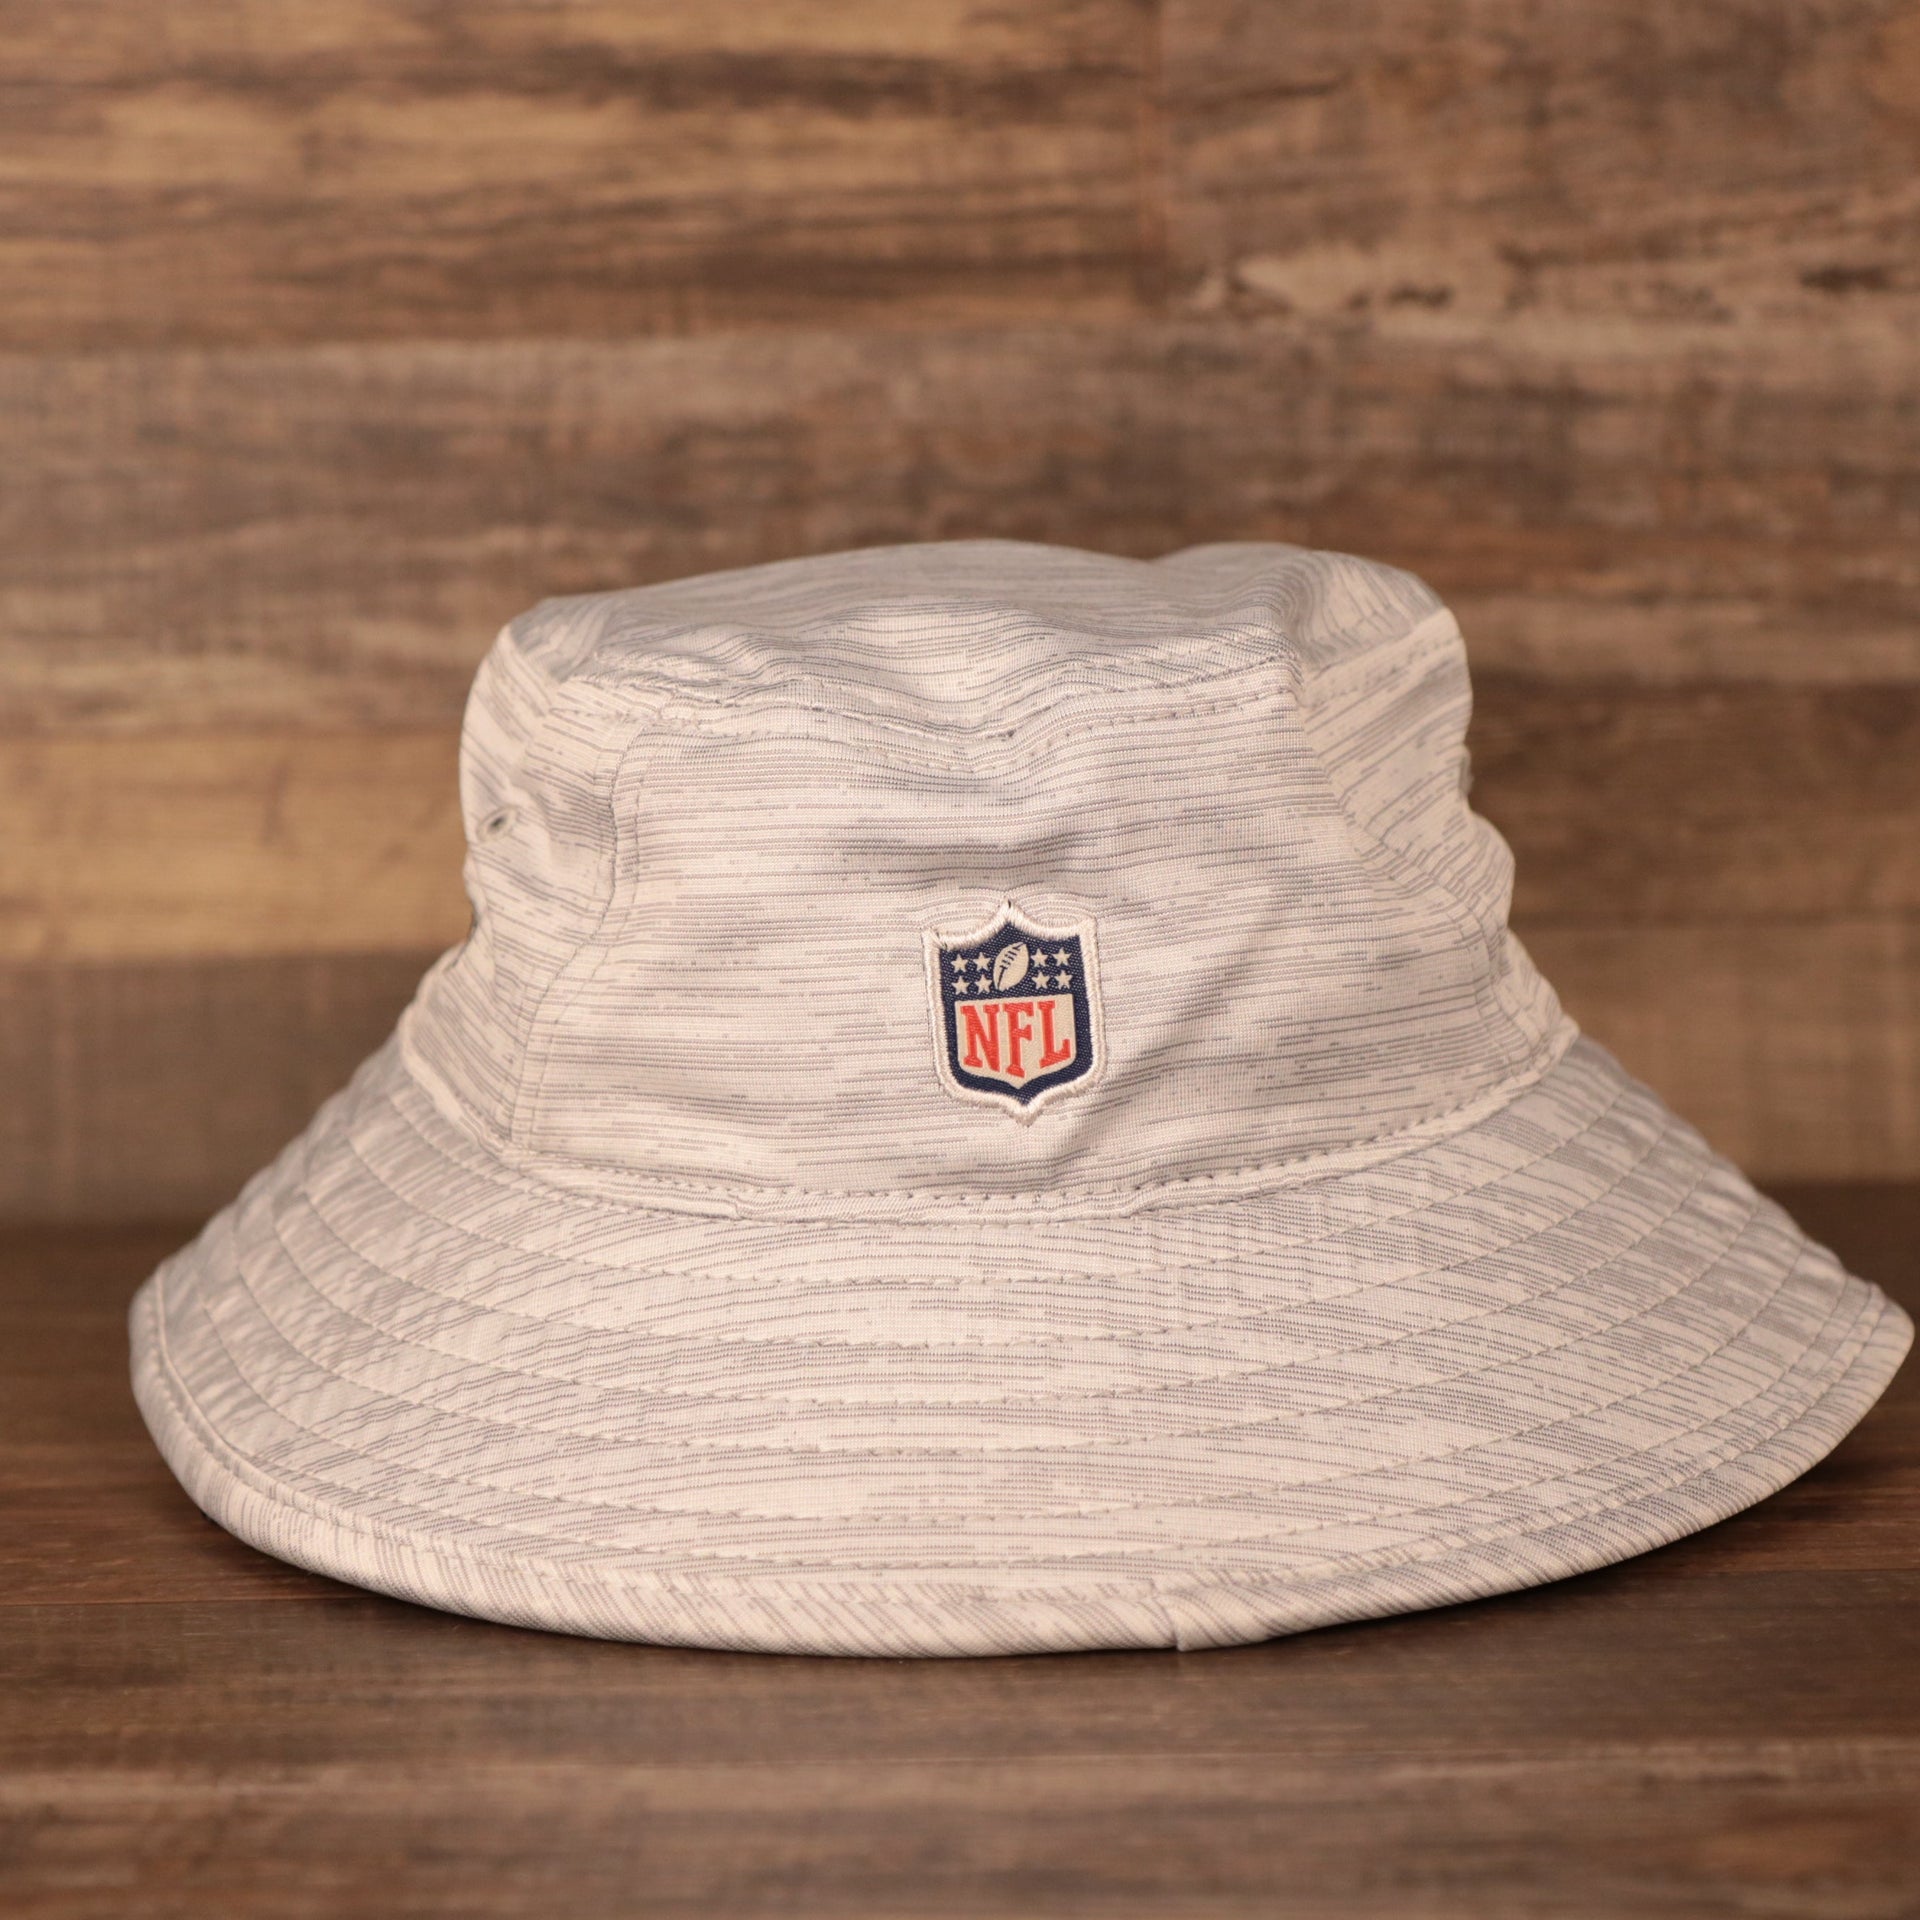 The NFL logo on the back of gray New Era 2021 carolina panthers nfl on field training bucket hat.